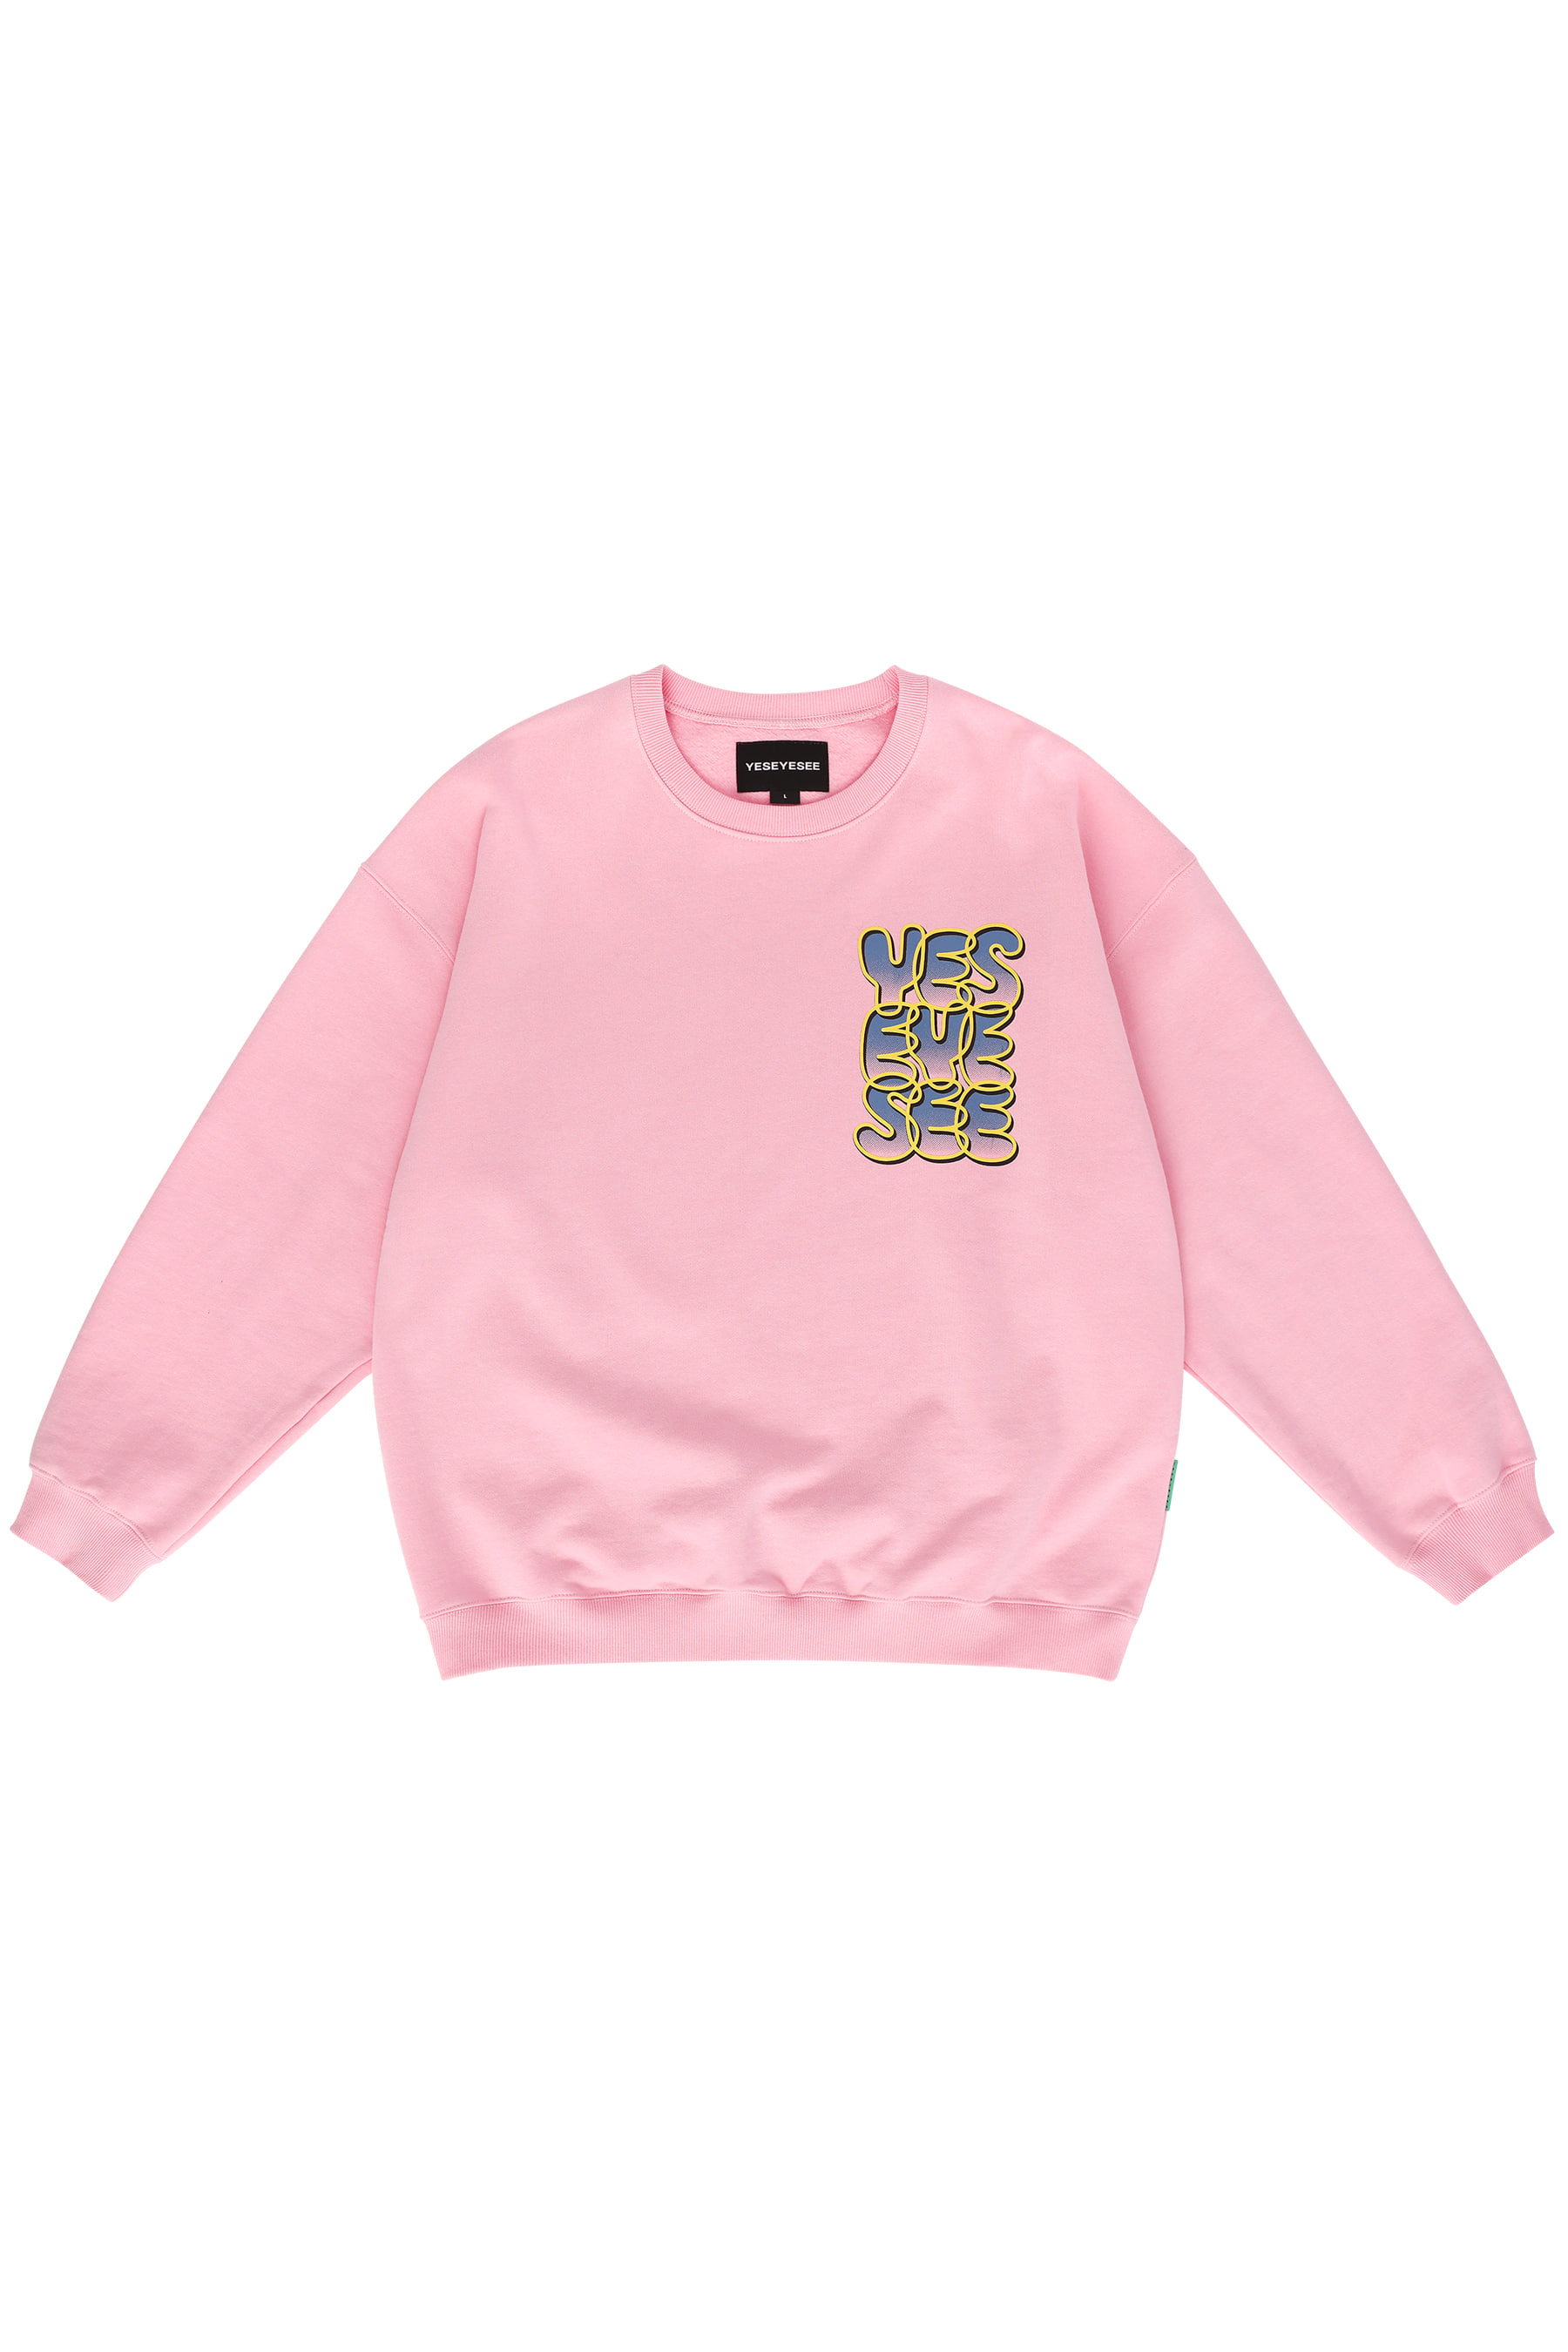 VTG Logo Sweatshirts Pink